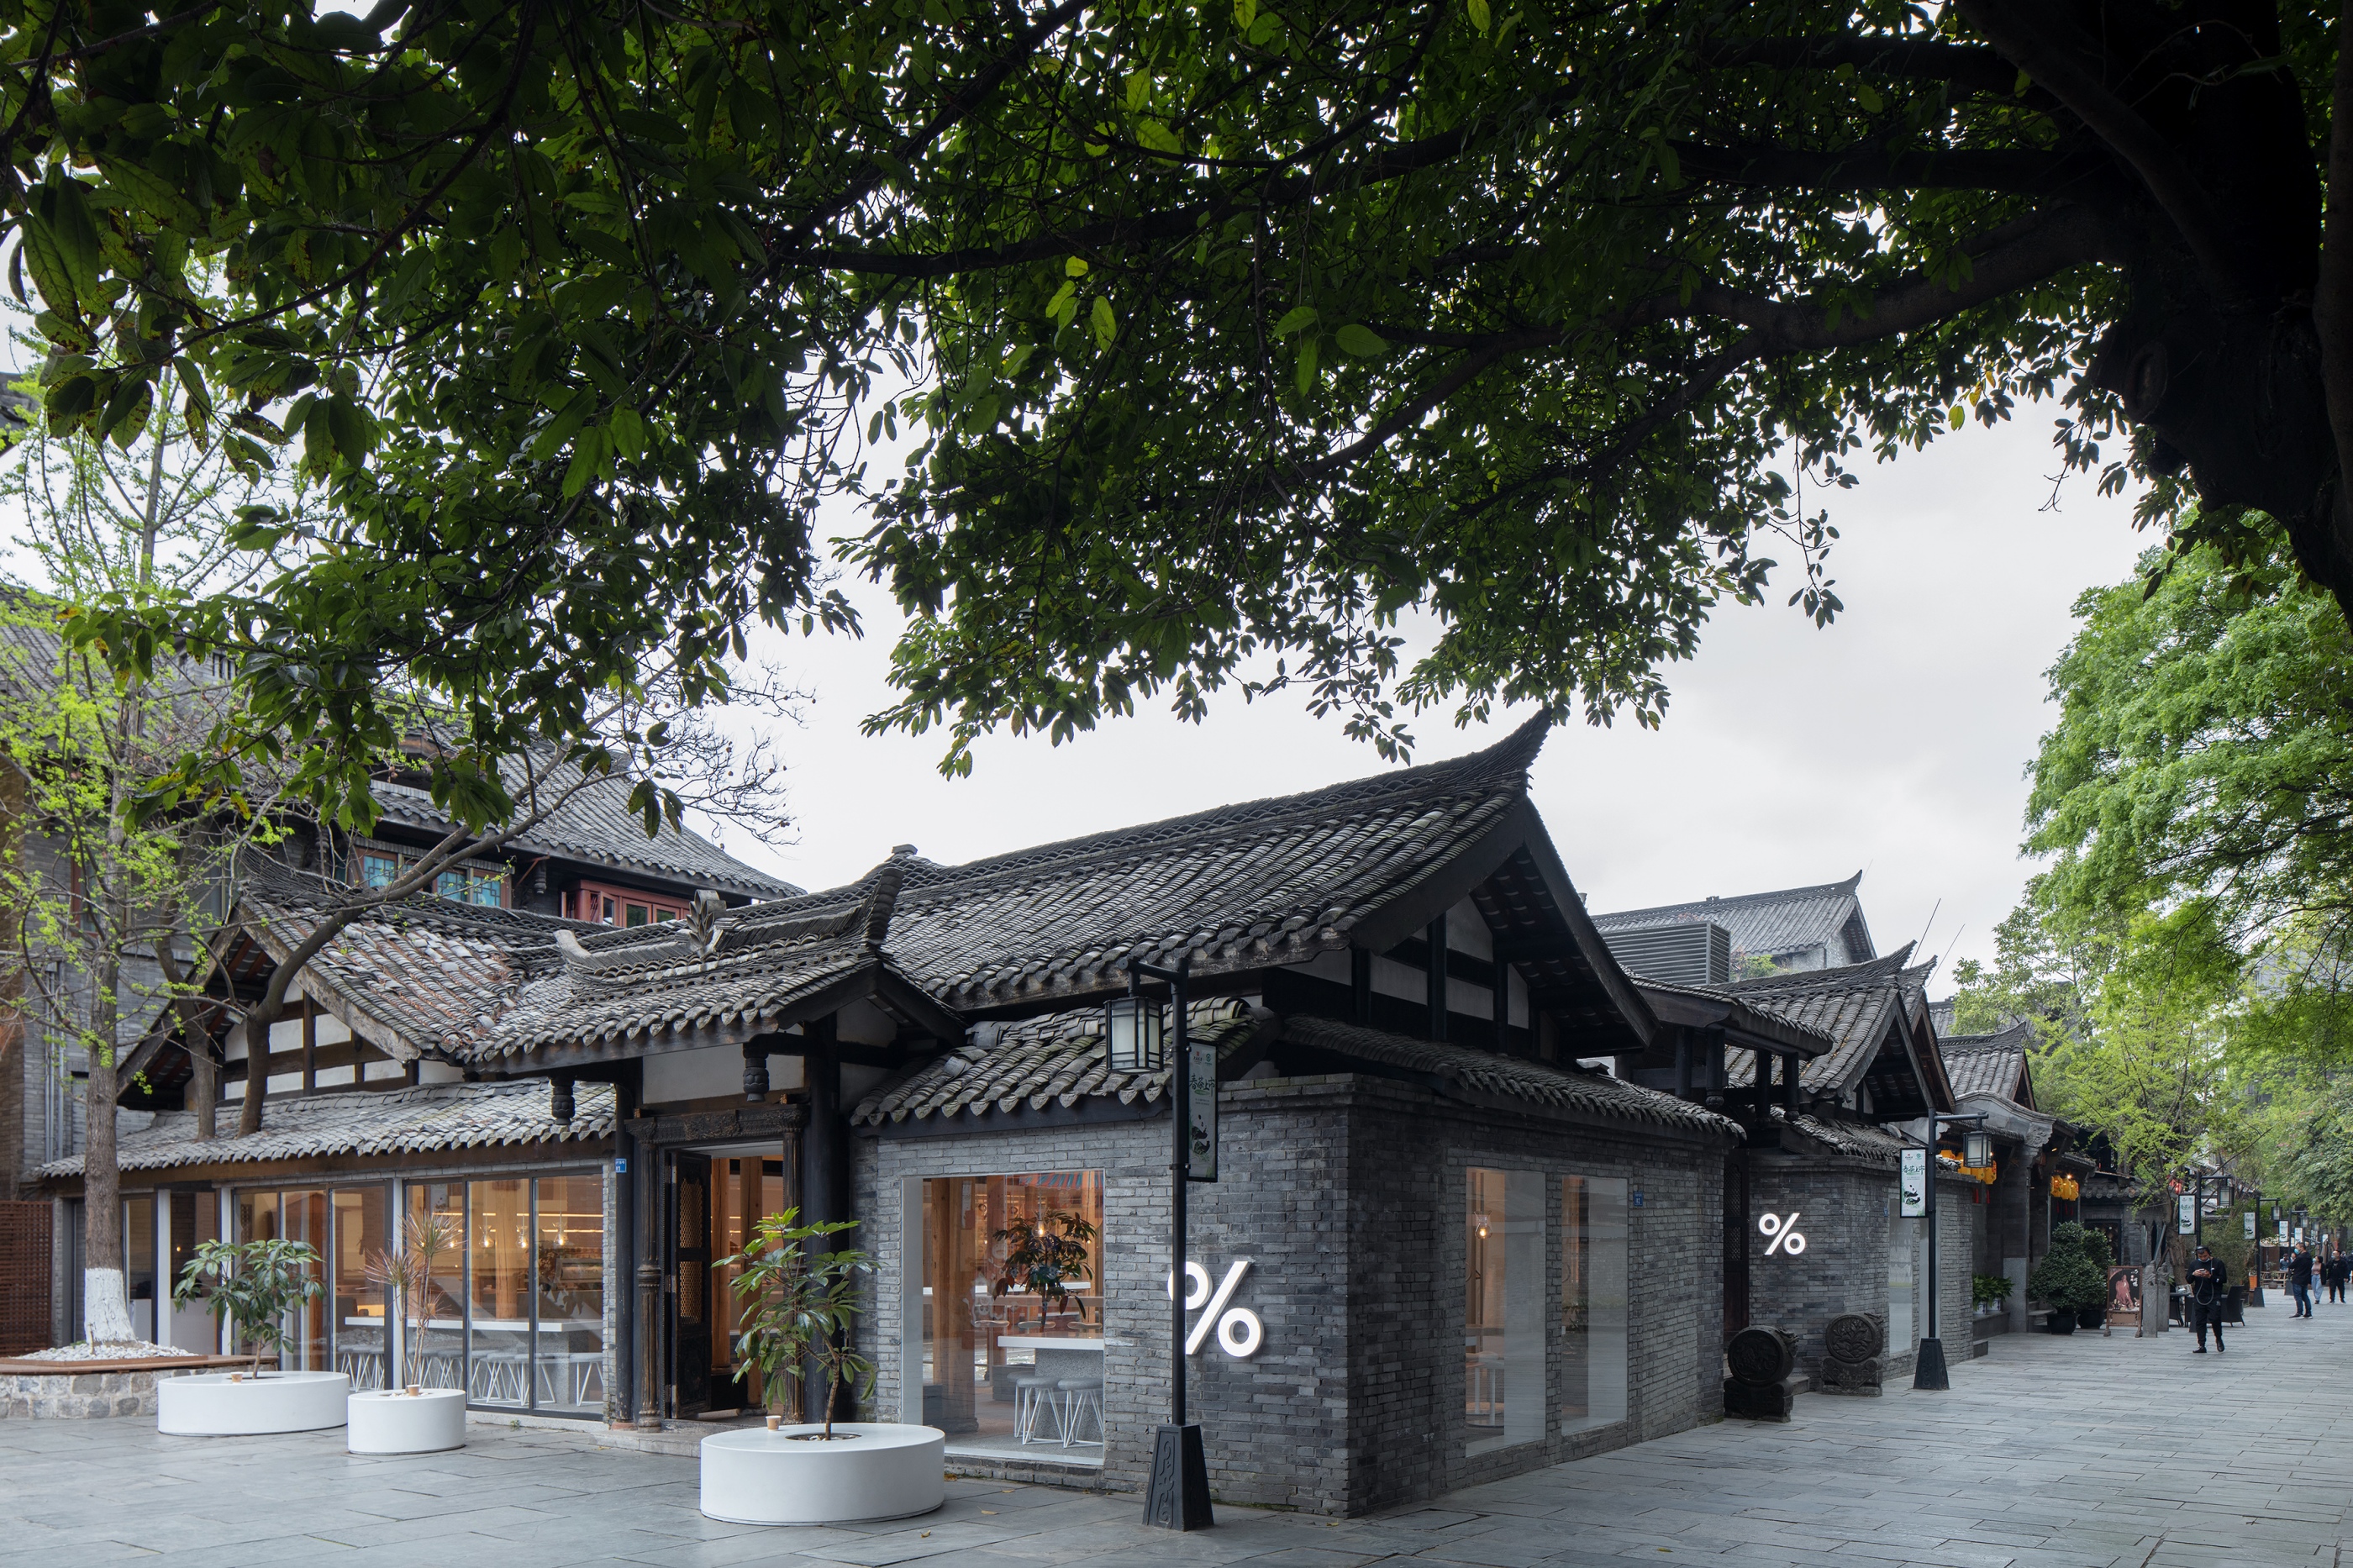 Exterior % Kafe Arabica in Kuanzhai Alley in Chengdu